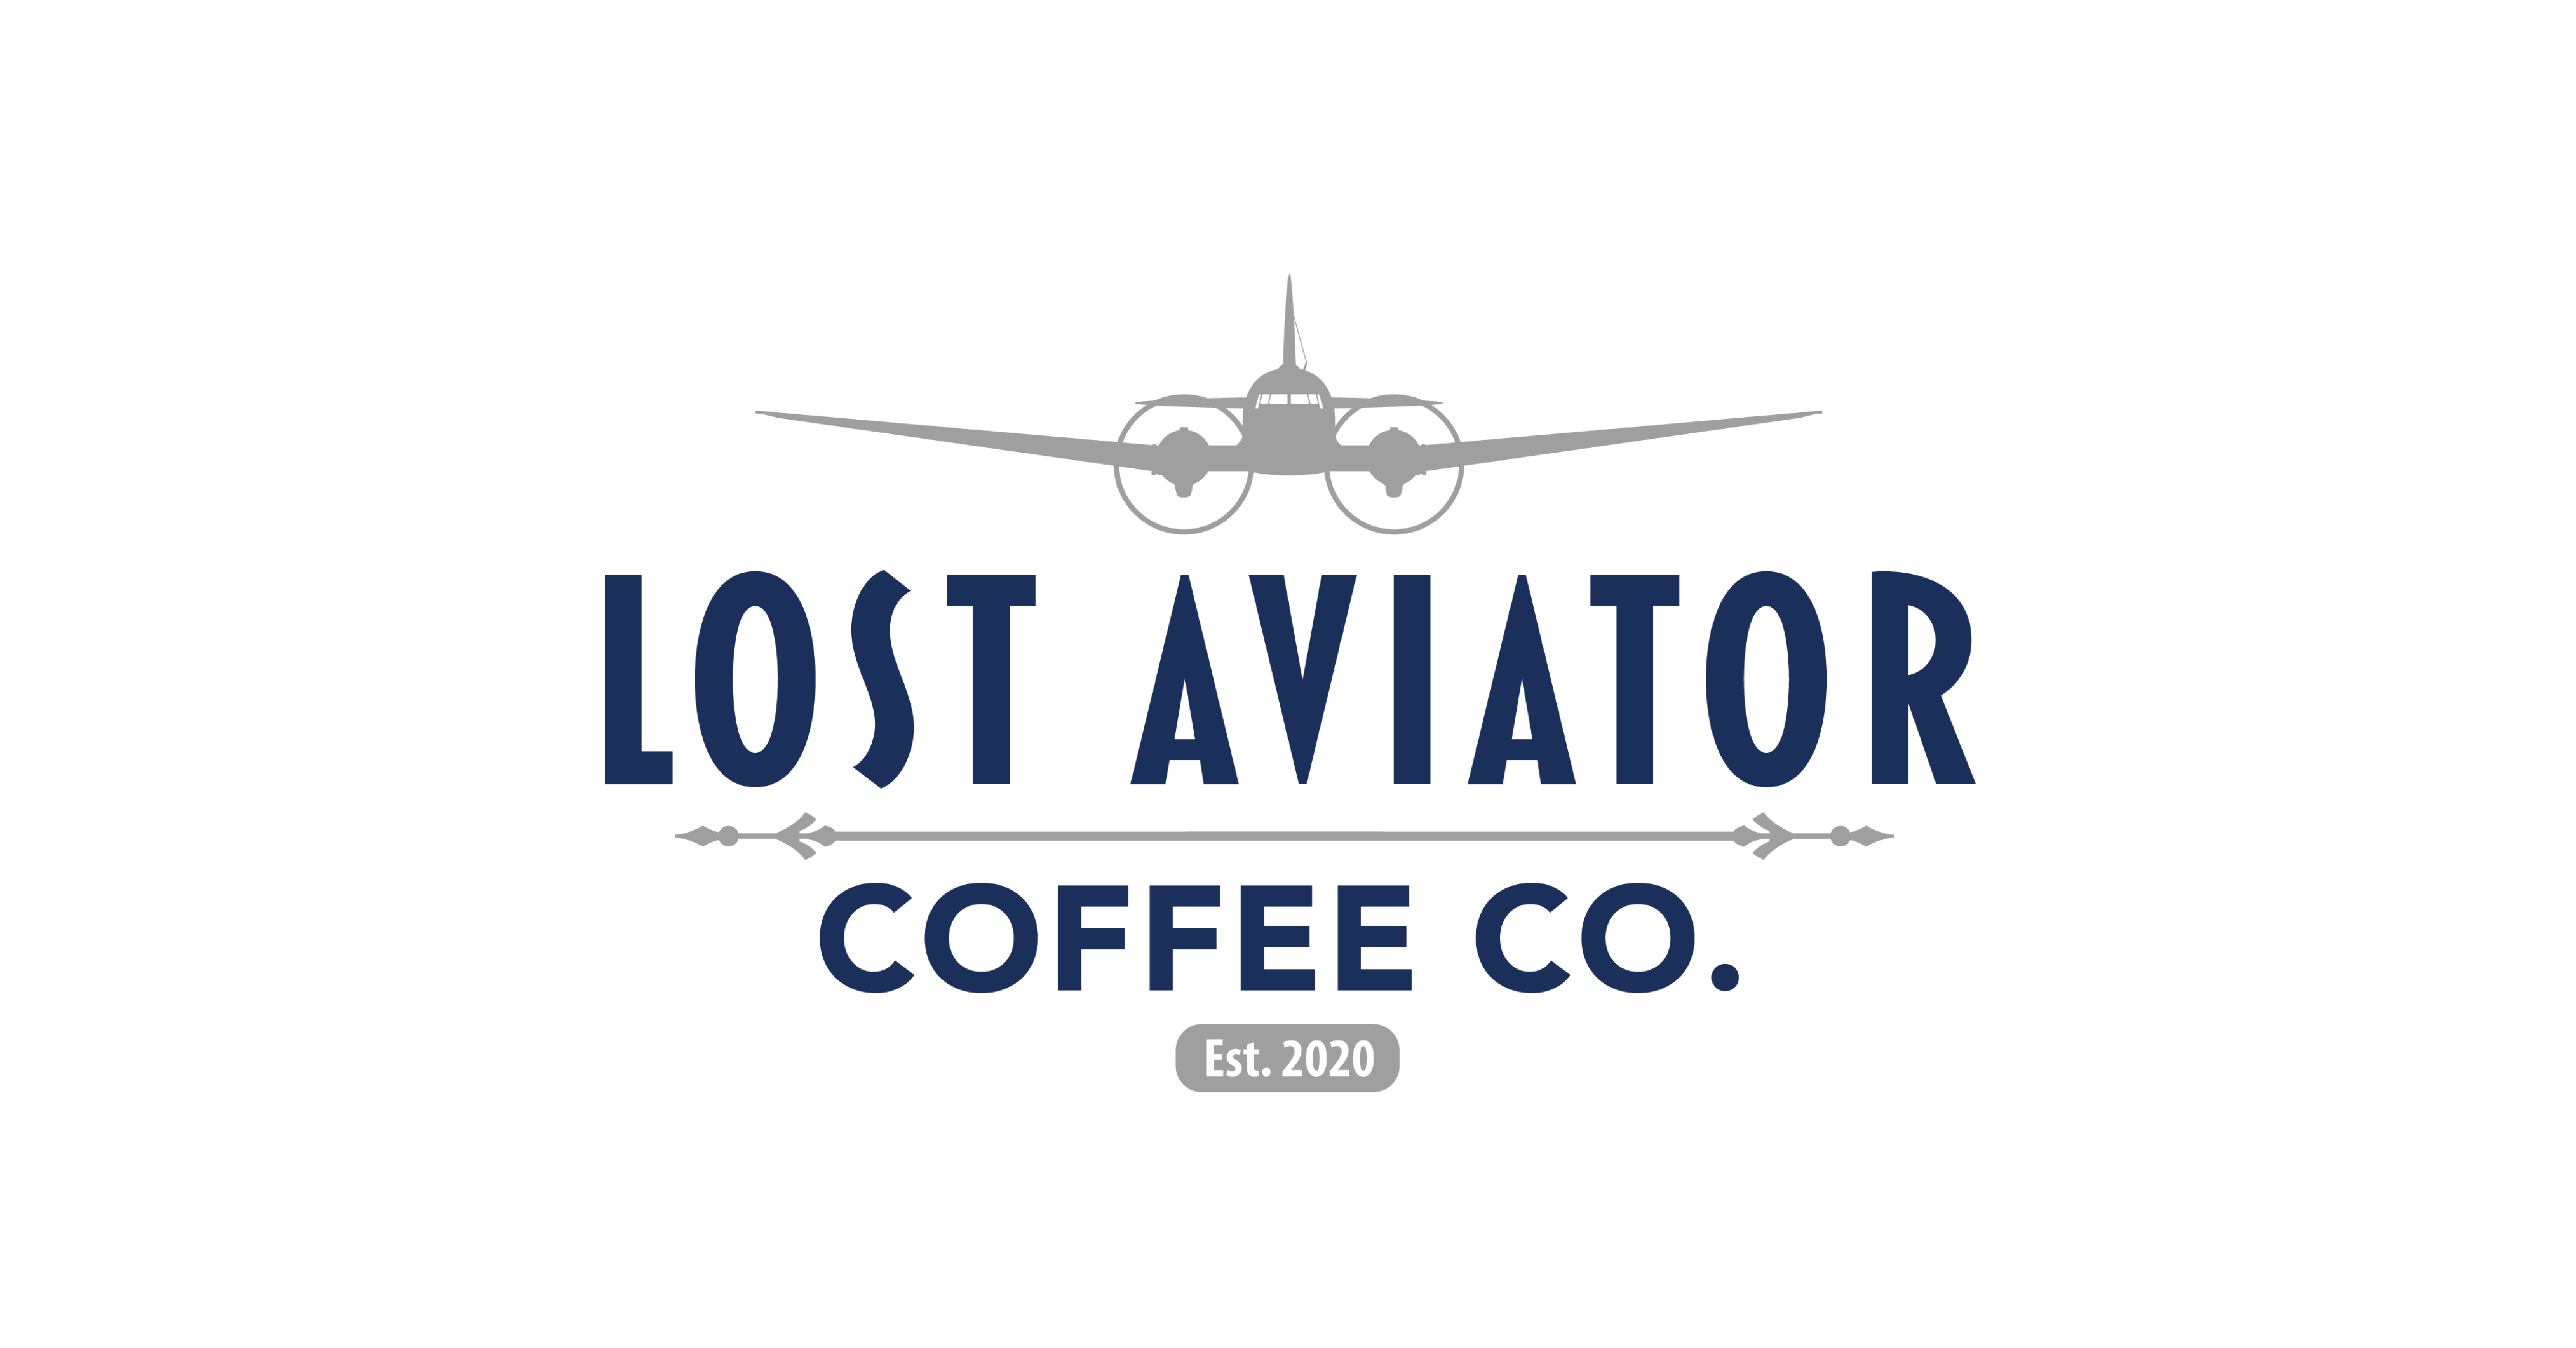 Lost Aviator Coffee Co.